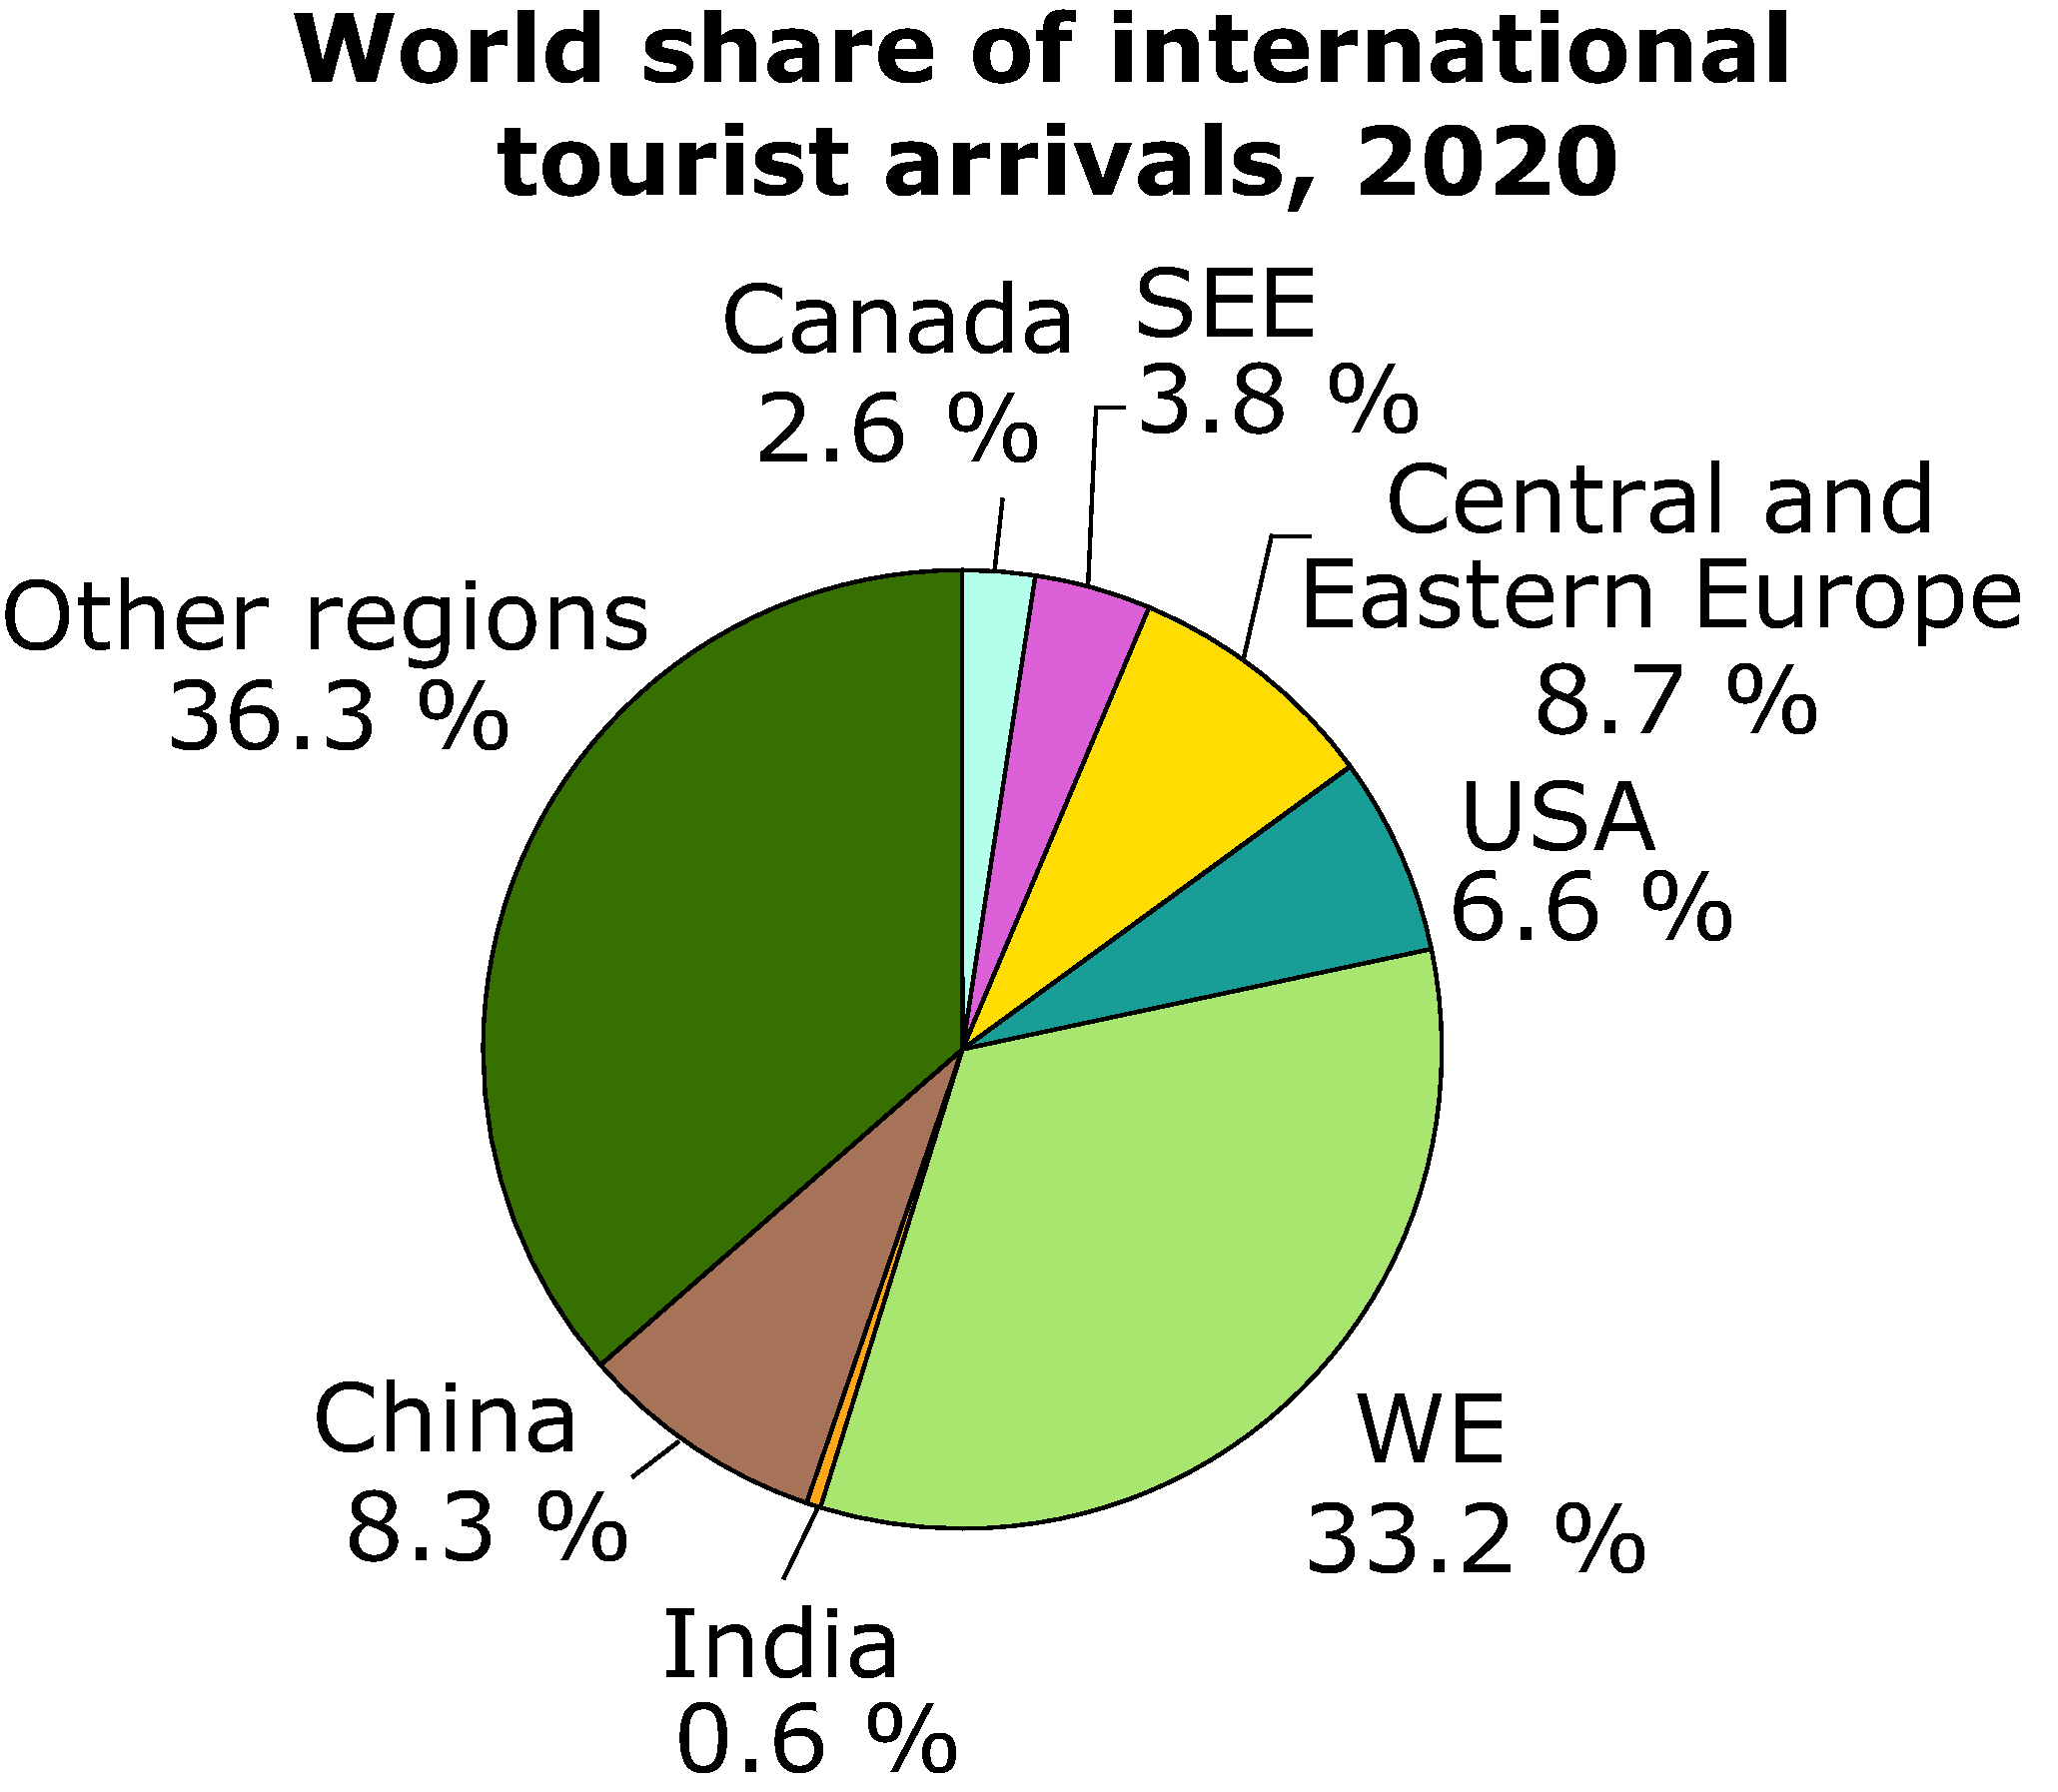 World share of international tourist arrivals, 2020